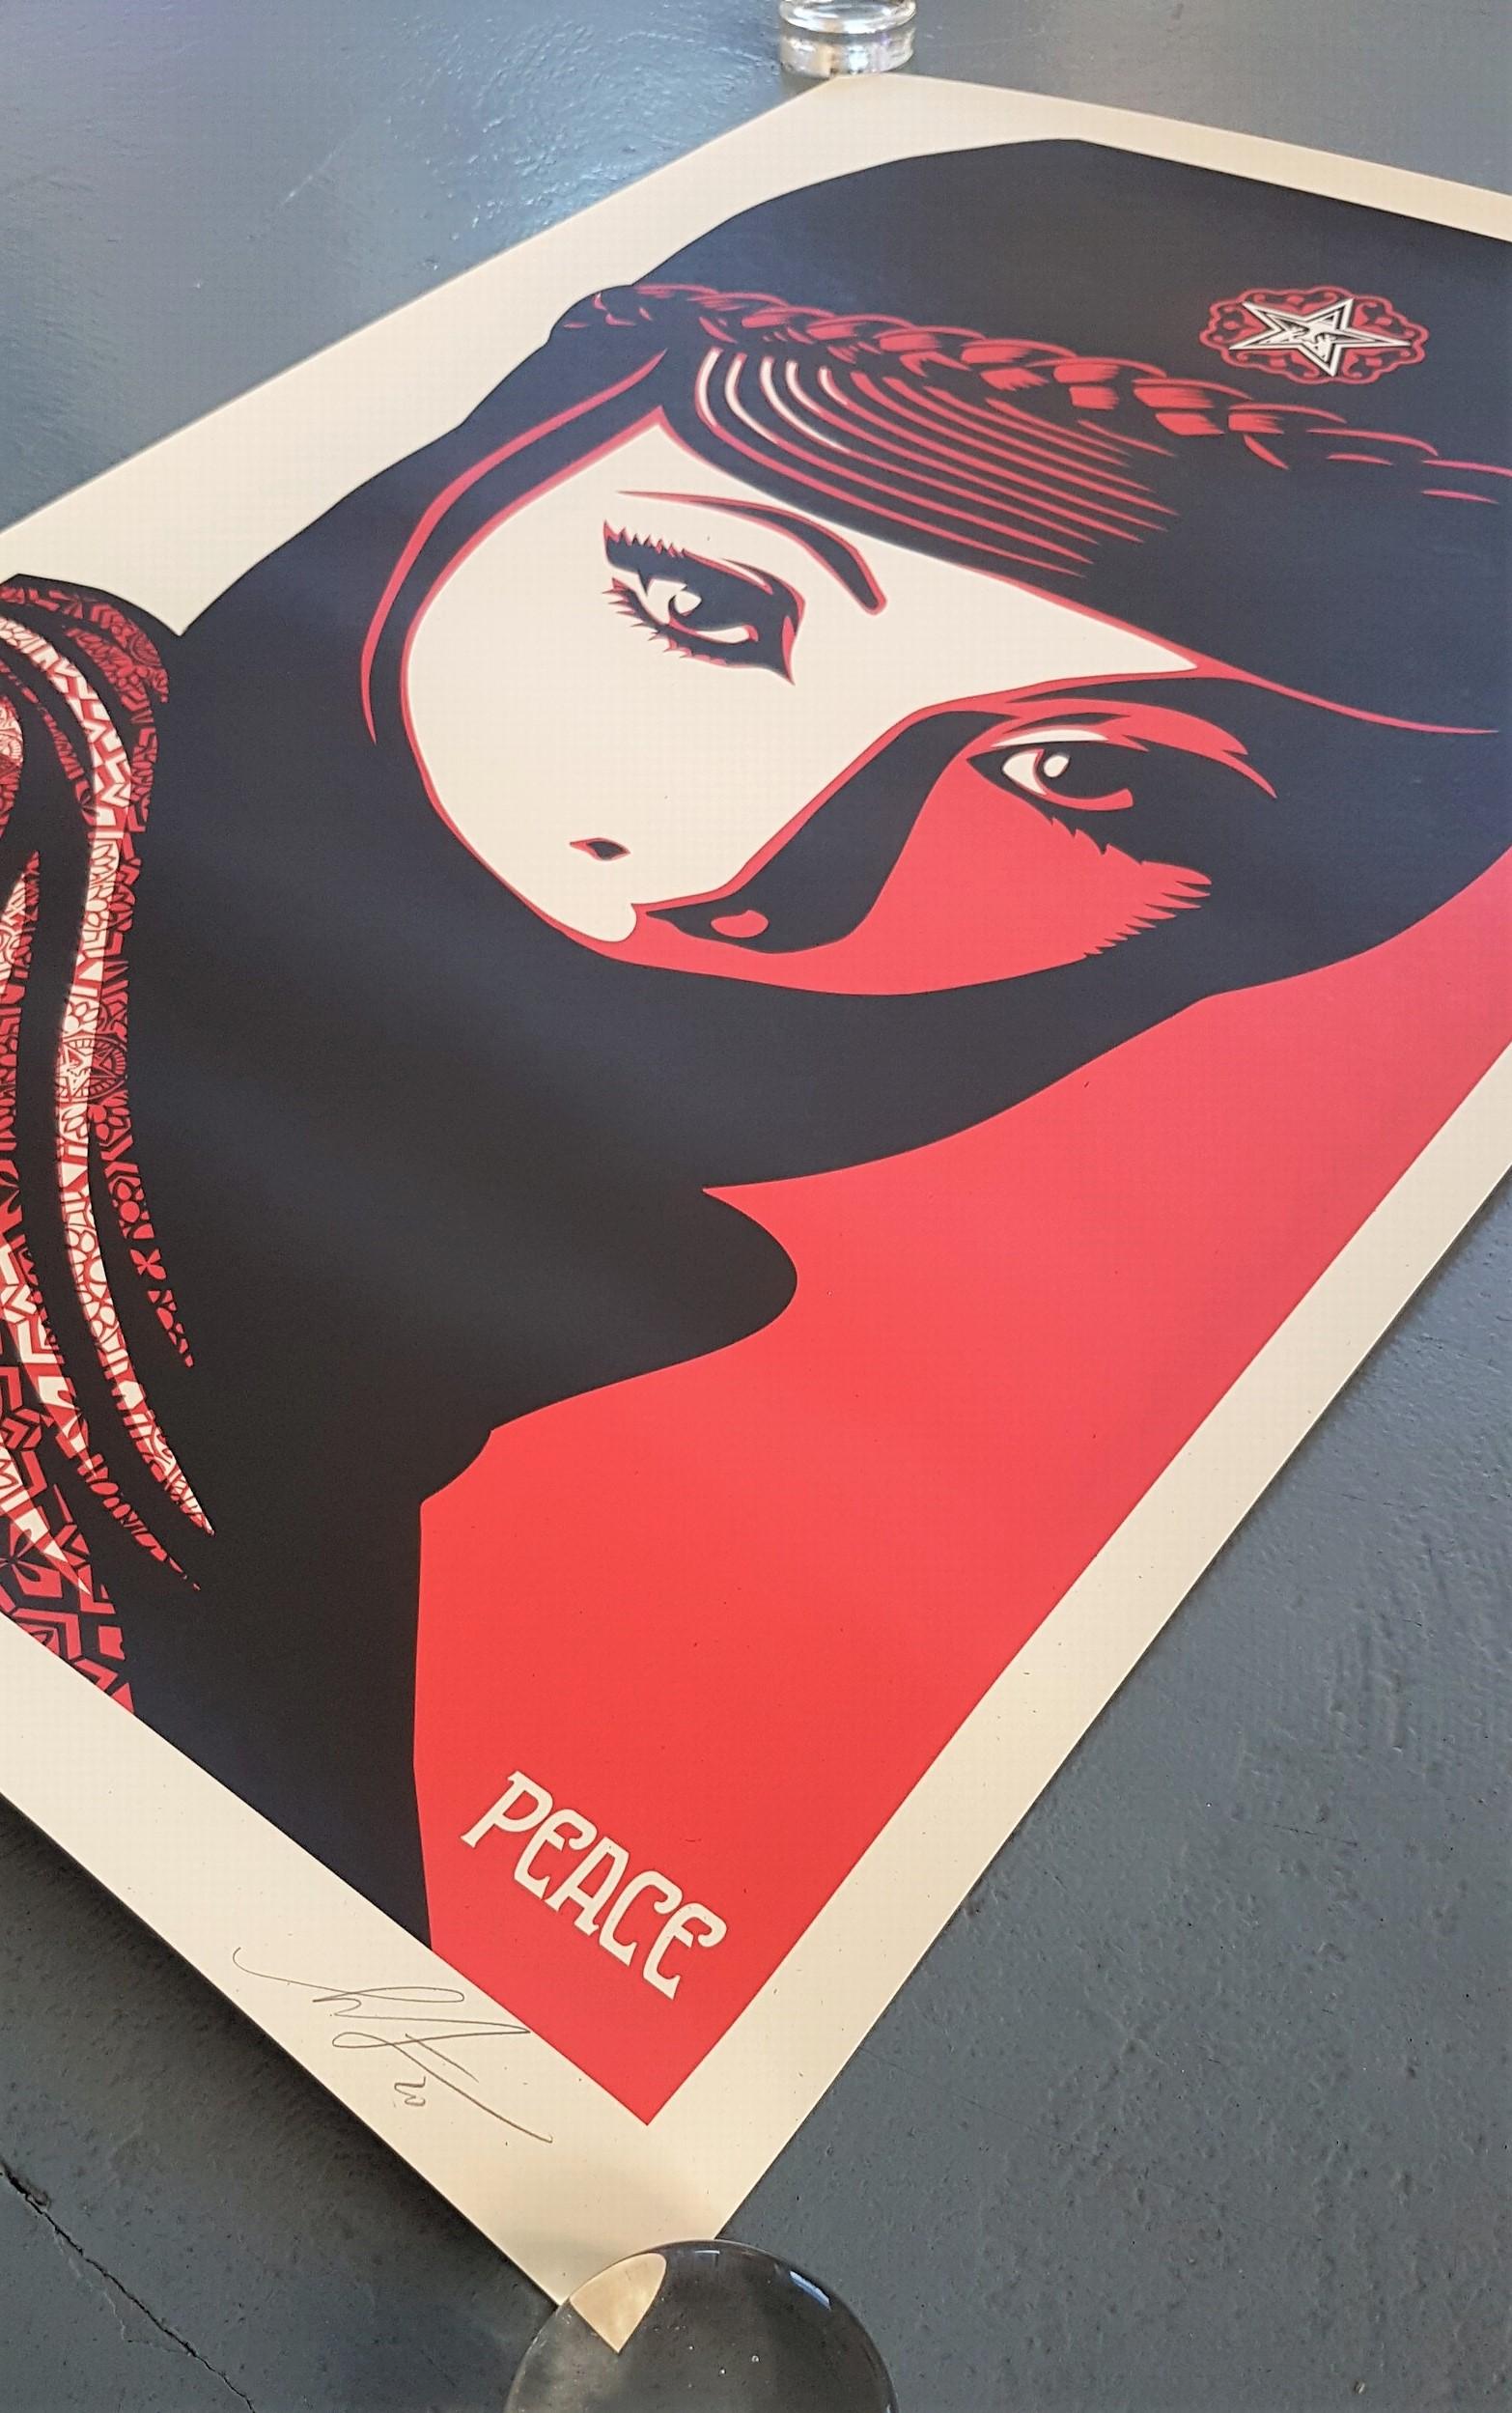 Mujer Fatale (Iconic, Zapatista, Emma Peel, Diana Rigg, Avengers, Femininity) - Contemporary Print by Shepard Fairey